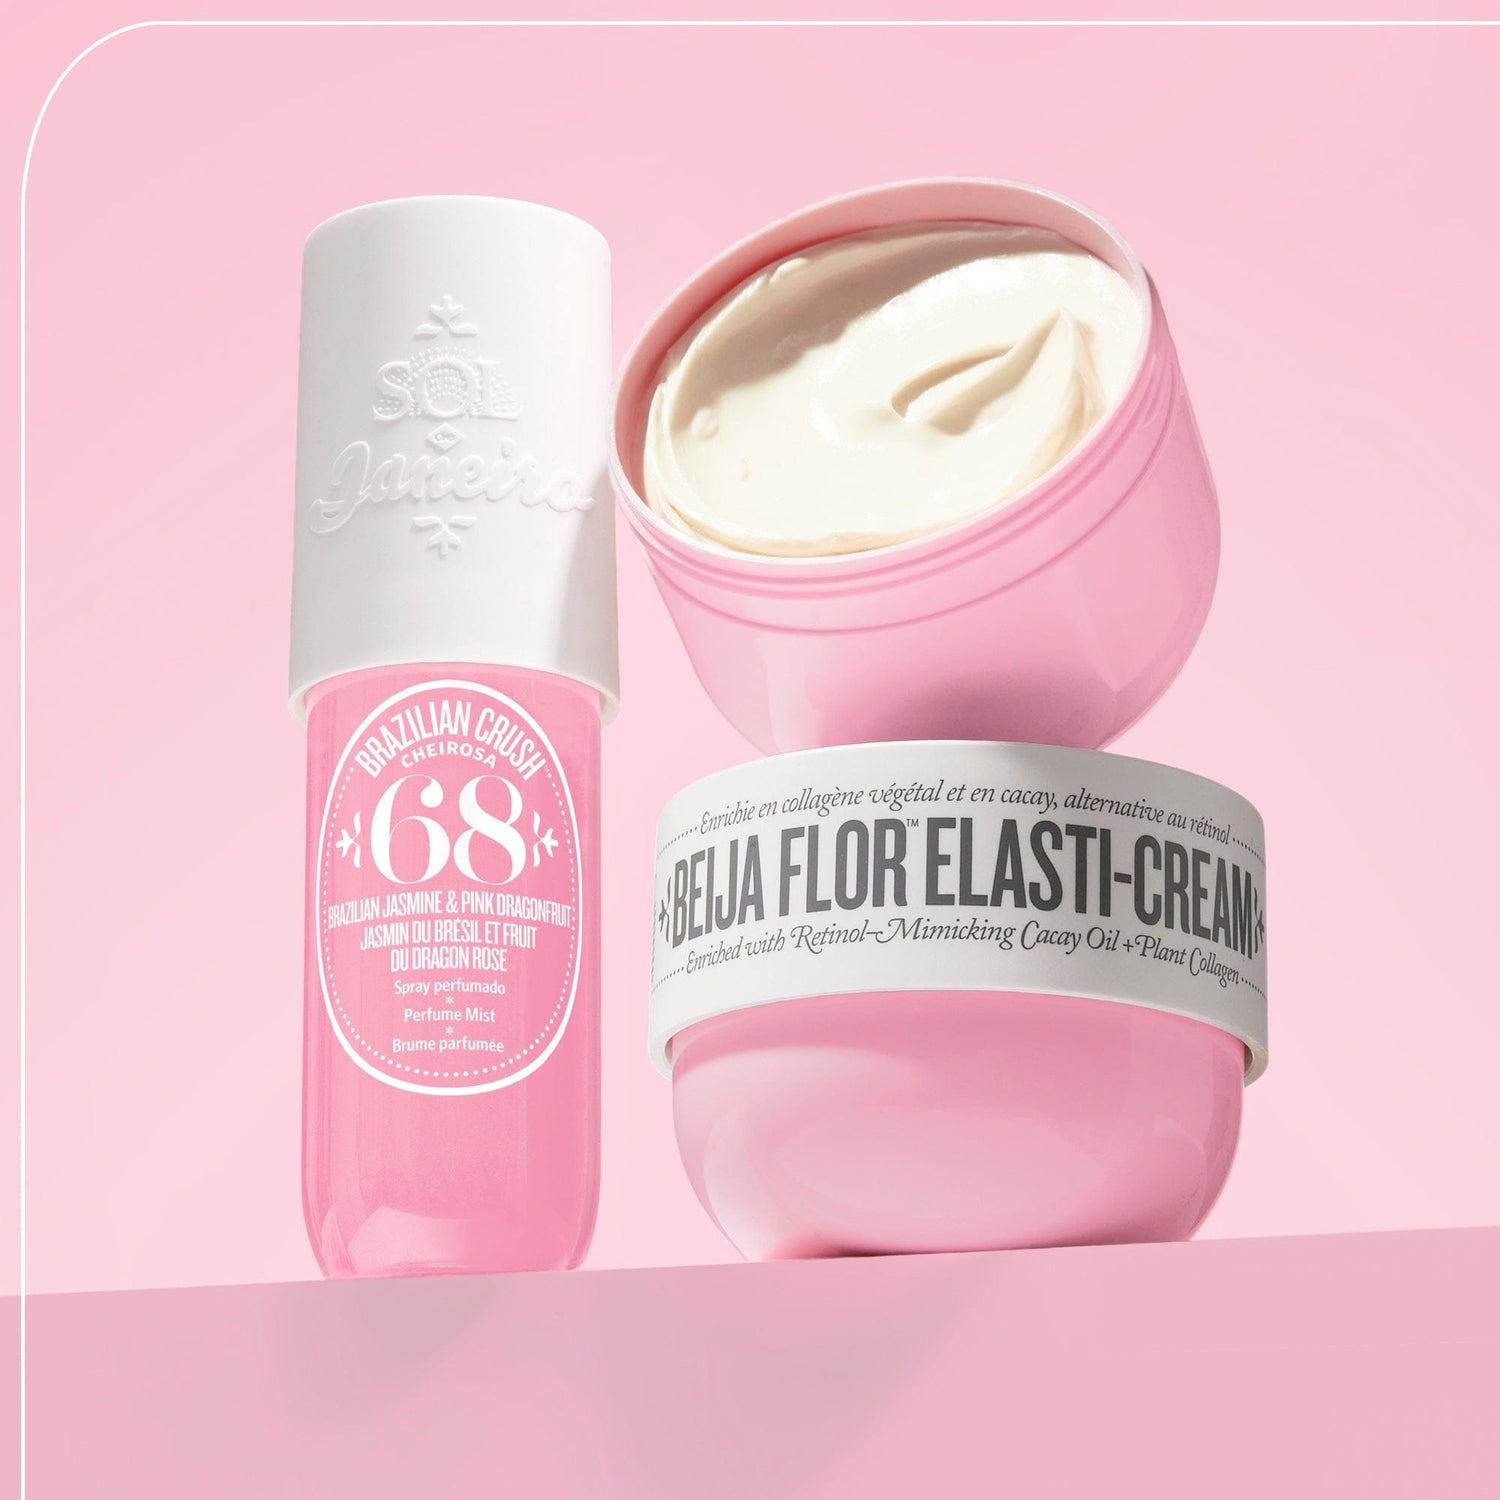 Brazilian Crush Cheirosa 68 Beija Flor™ Perfume Mist and Beija Flor Elasti-cream